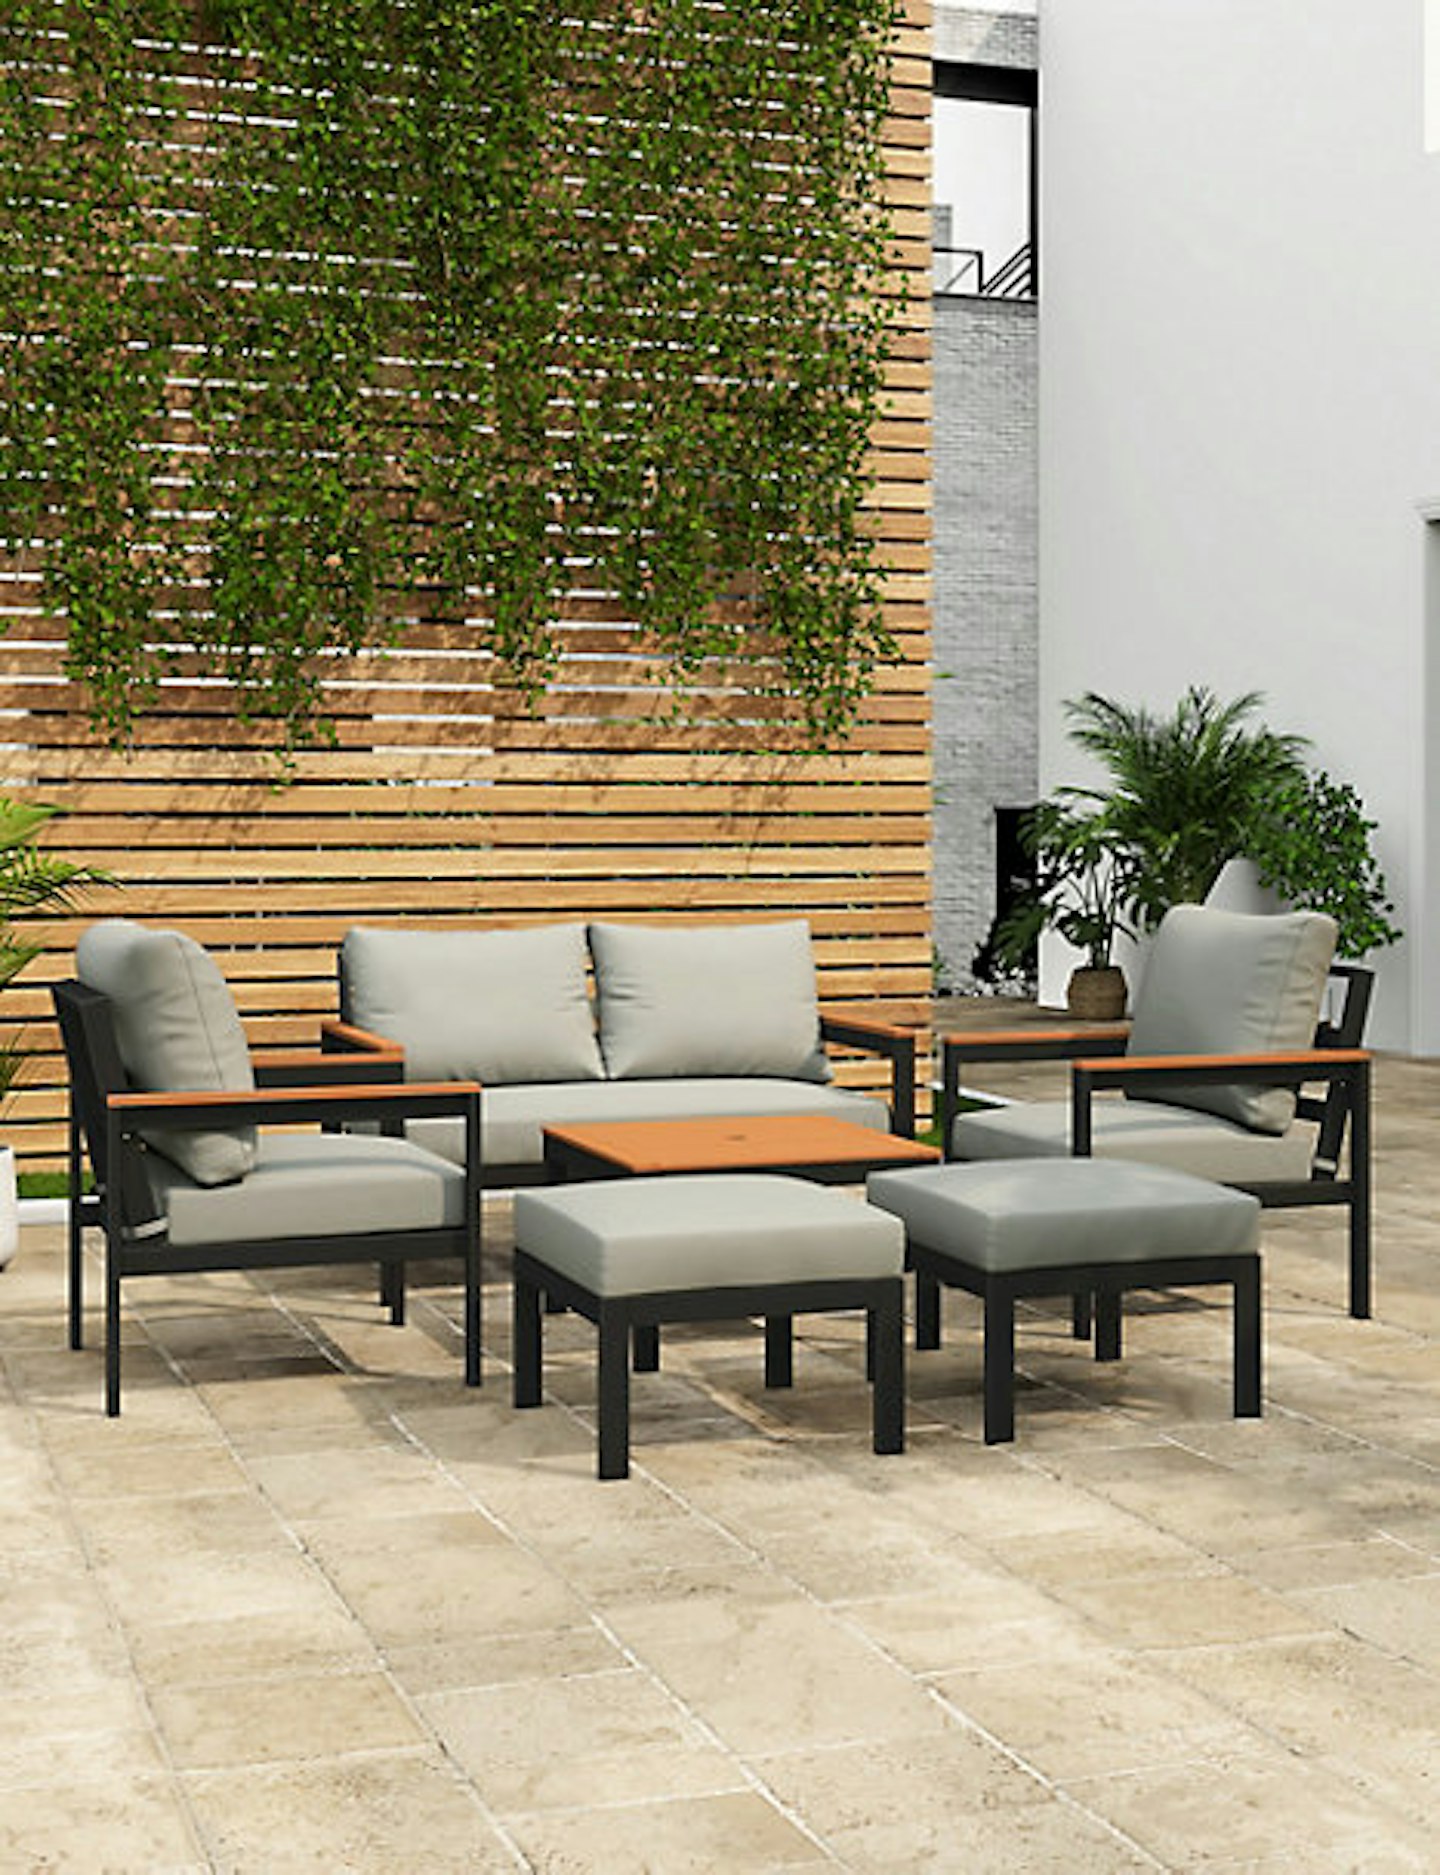 Best Outdoor Garden Furniture - Grazia